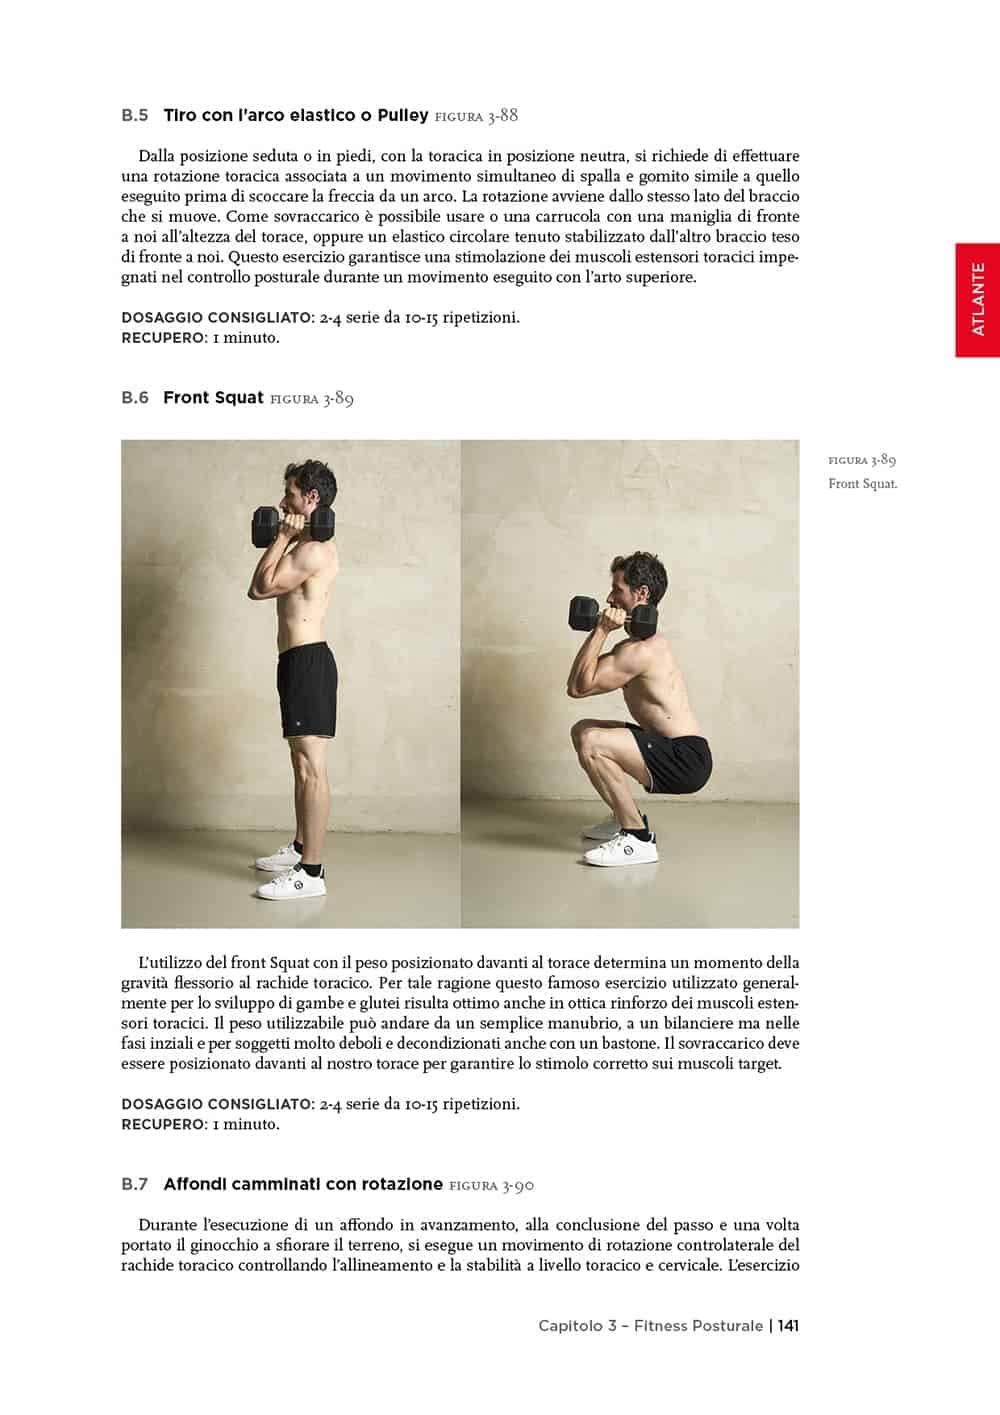 Fitness Posturale 2 pagine atlante